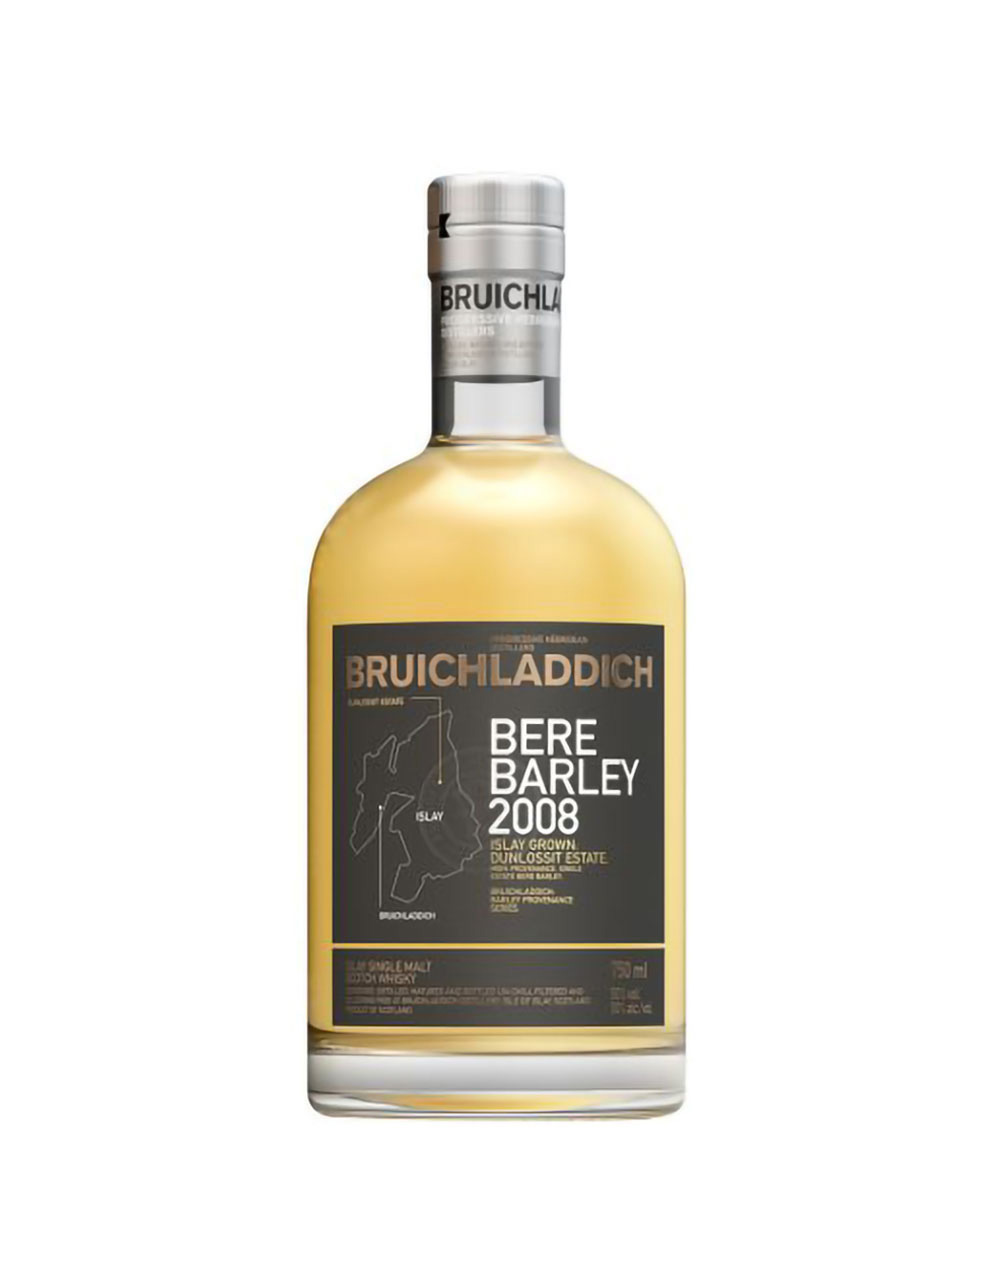 Bruichladdich Bere Barley 2008 Single Malt Scotch Whisky